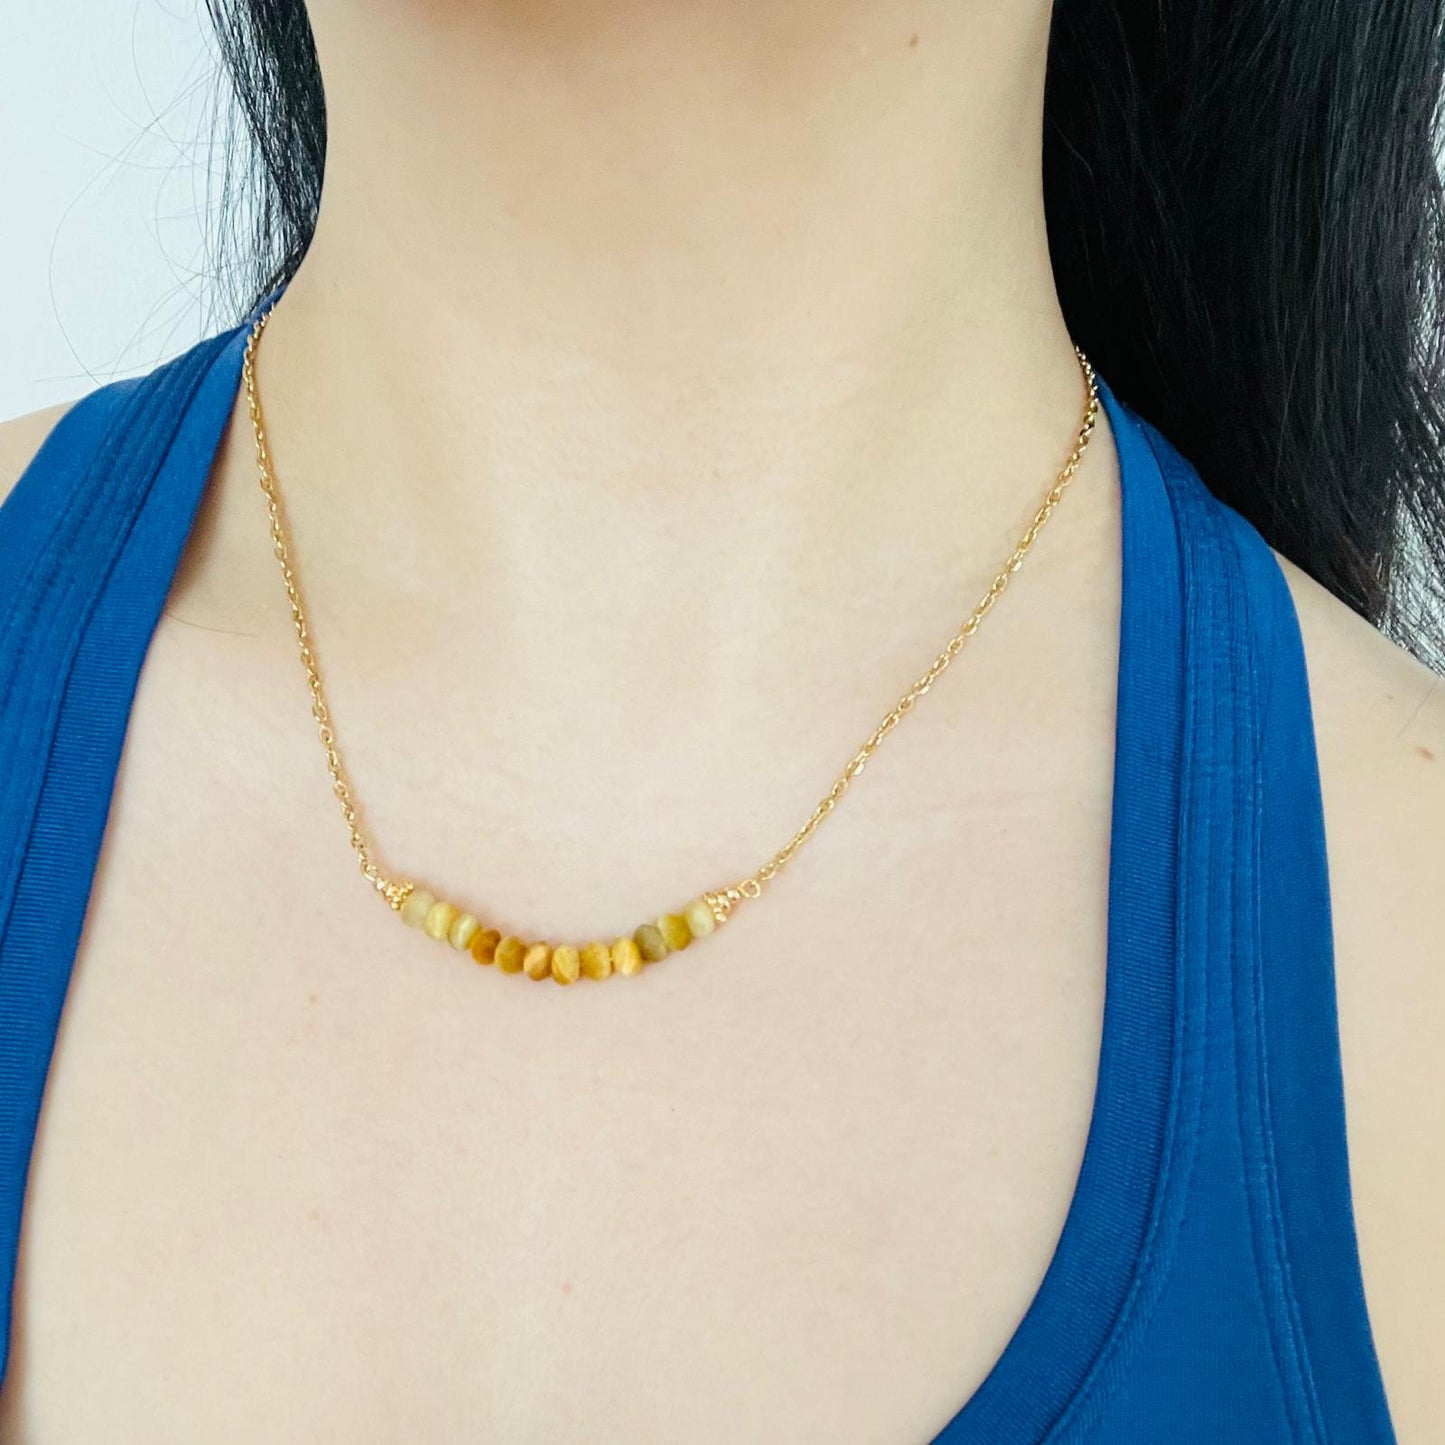 Honey Tigereye Moon Necklace